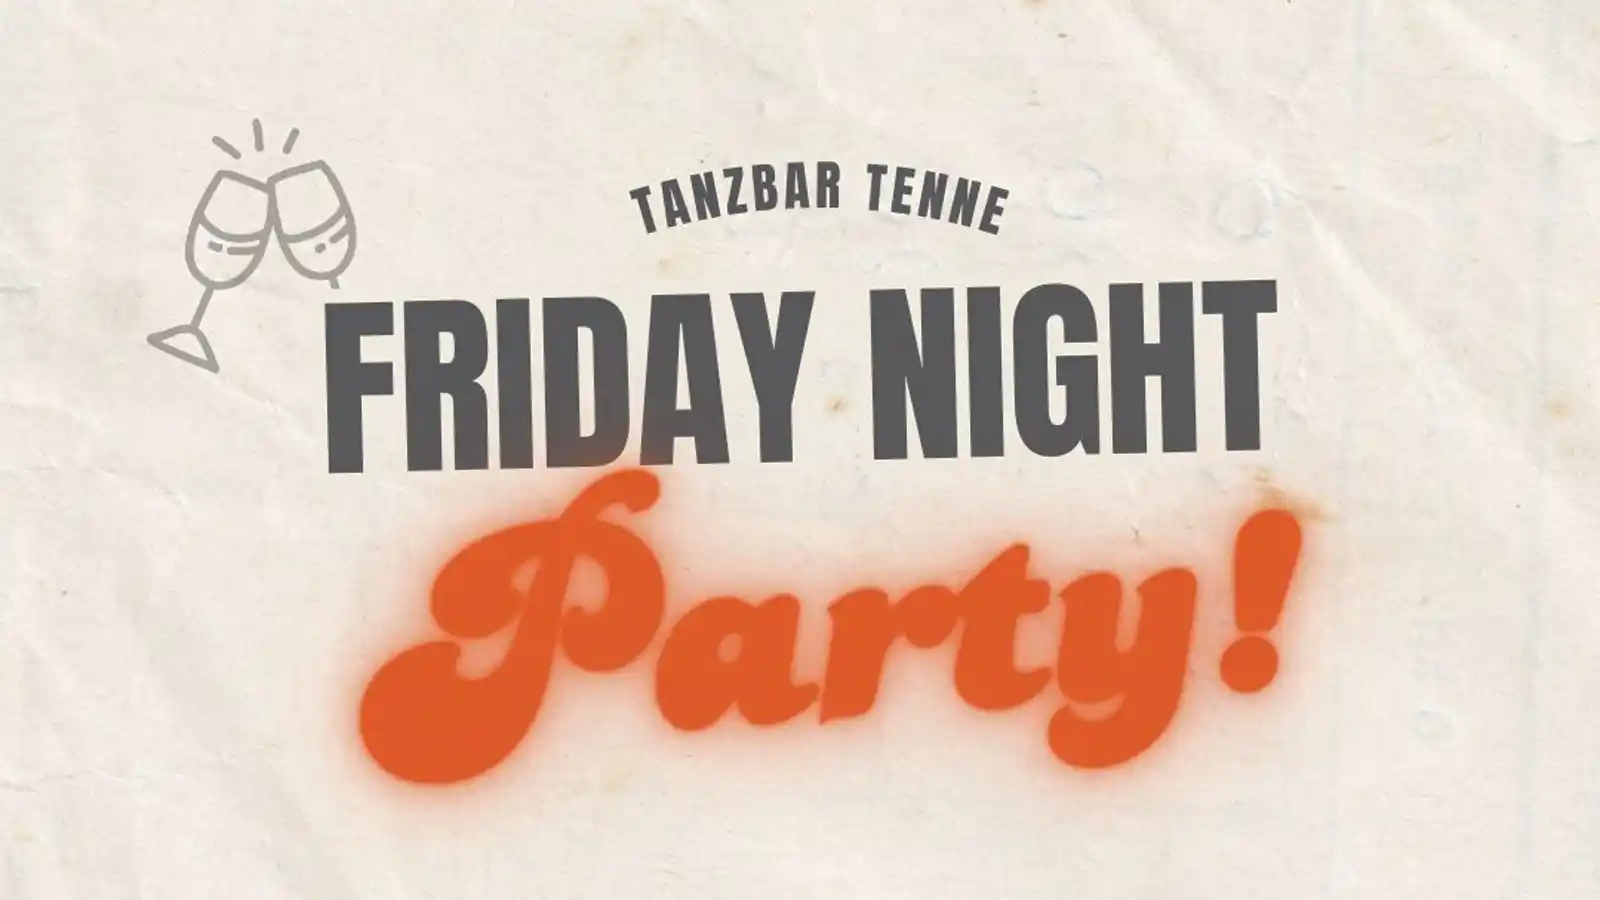 friday night party tanzbar tenne